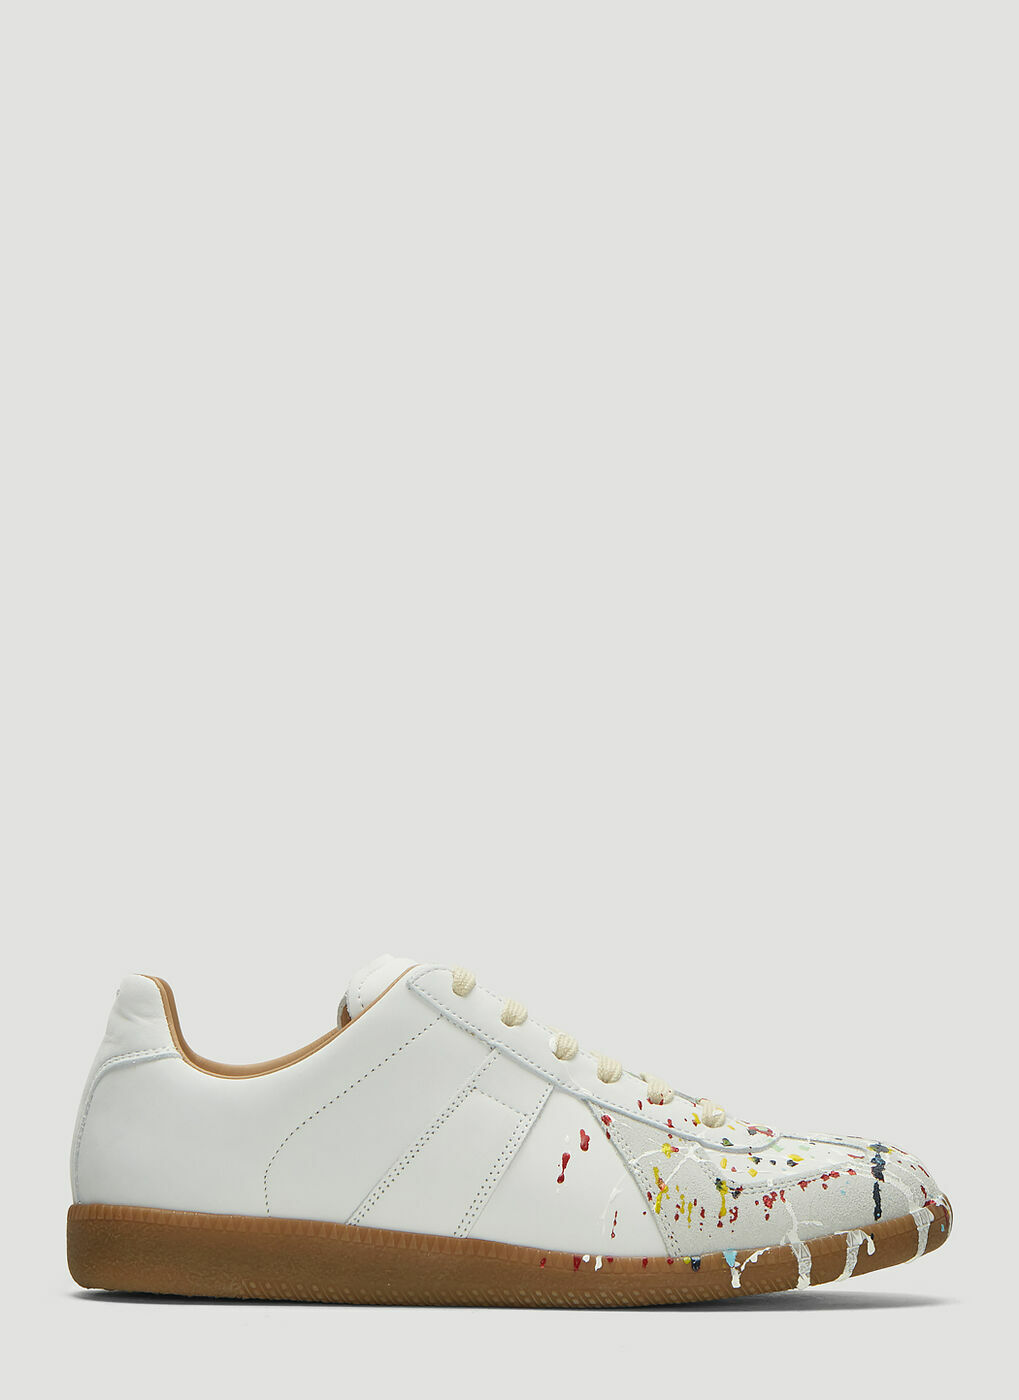 Maison Margiela - Replica Paint Drop Sneakers in White Maison Margiela